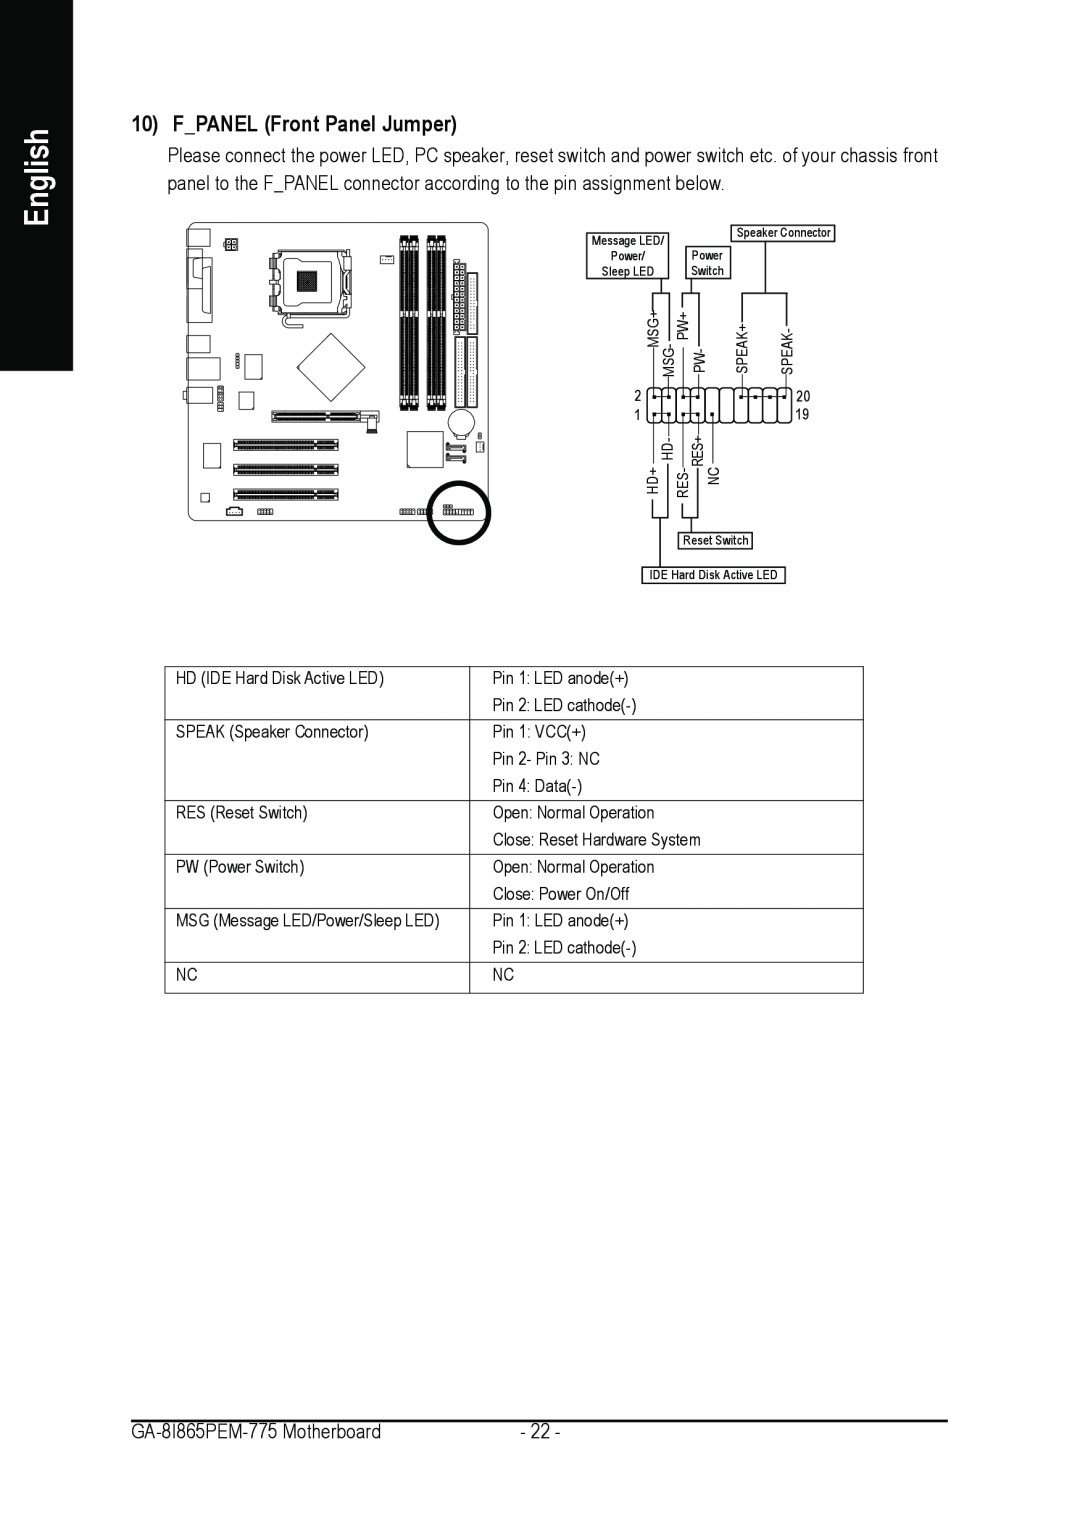 Gigabyte GA-8I865PEM-775 user manual FPANEL Front Panel Jumper, English, Msg+ Msg- Pw+ Pw, Speak+, Hd+ Hd- Res- Res+ Nc 